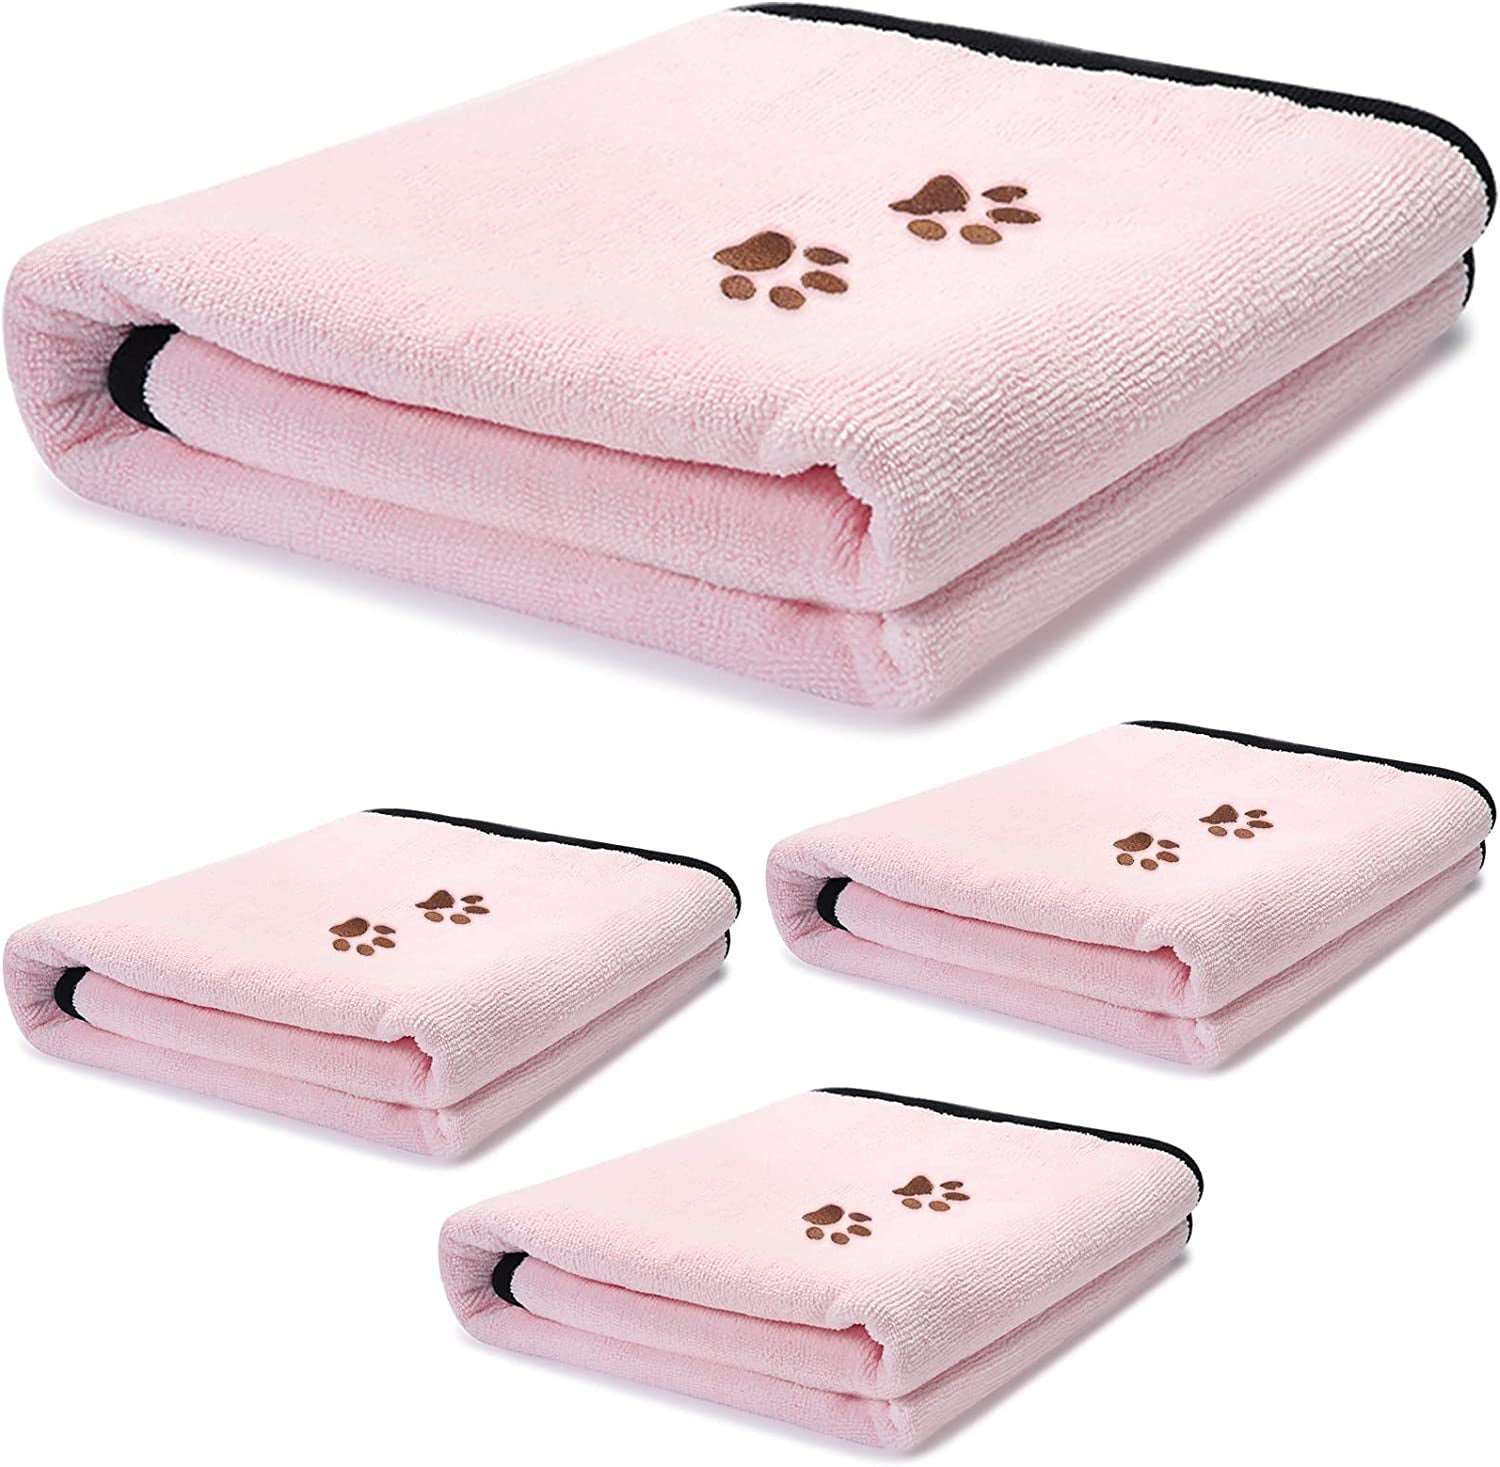 4 Pack Dog Towels Soft Absorbent Pet Bath 